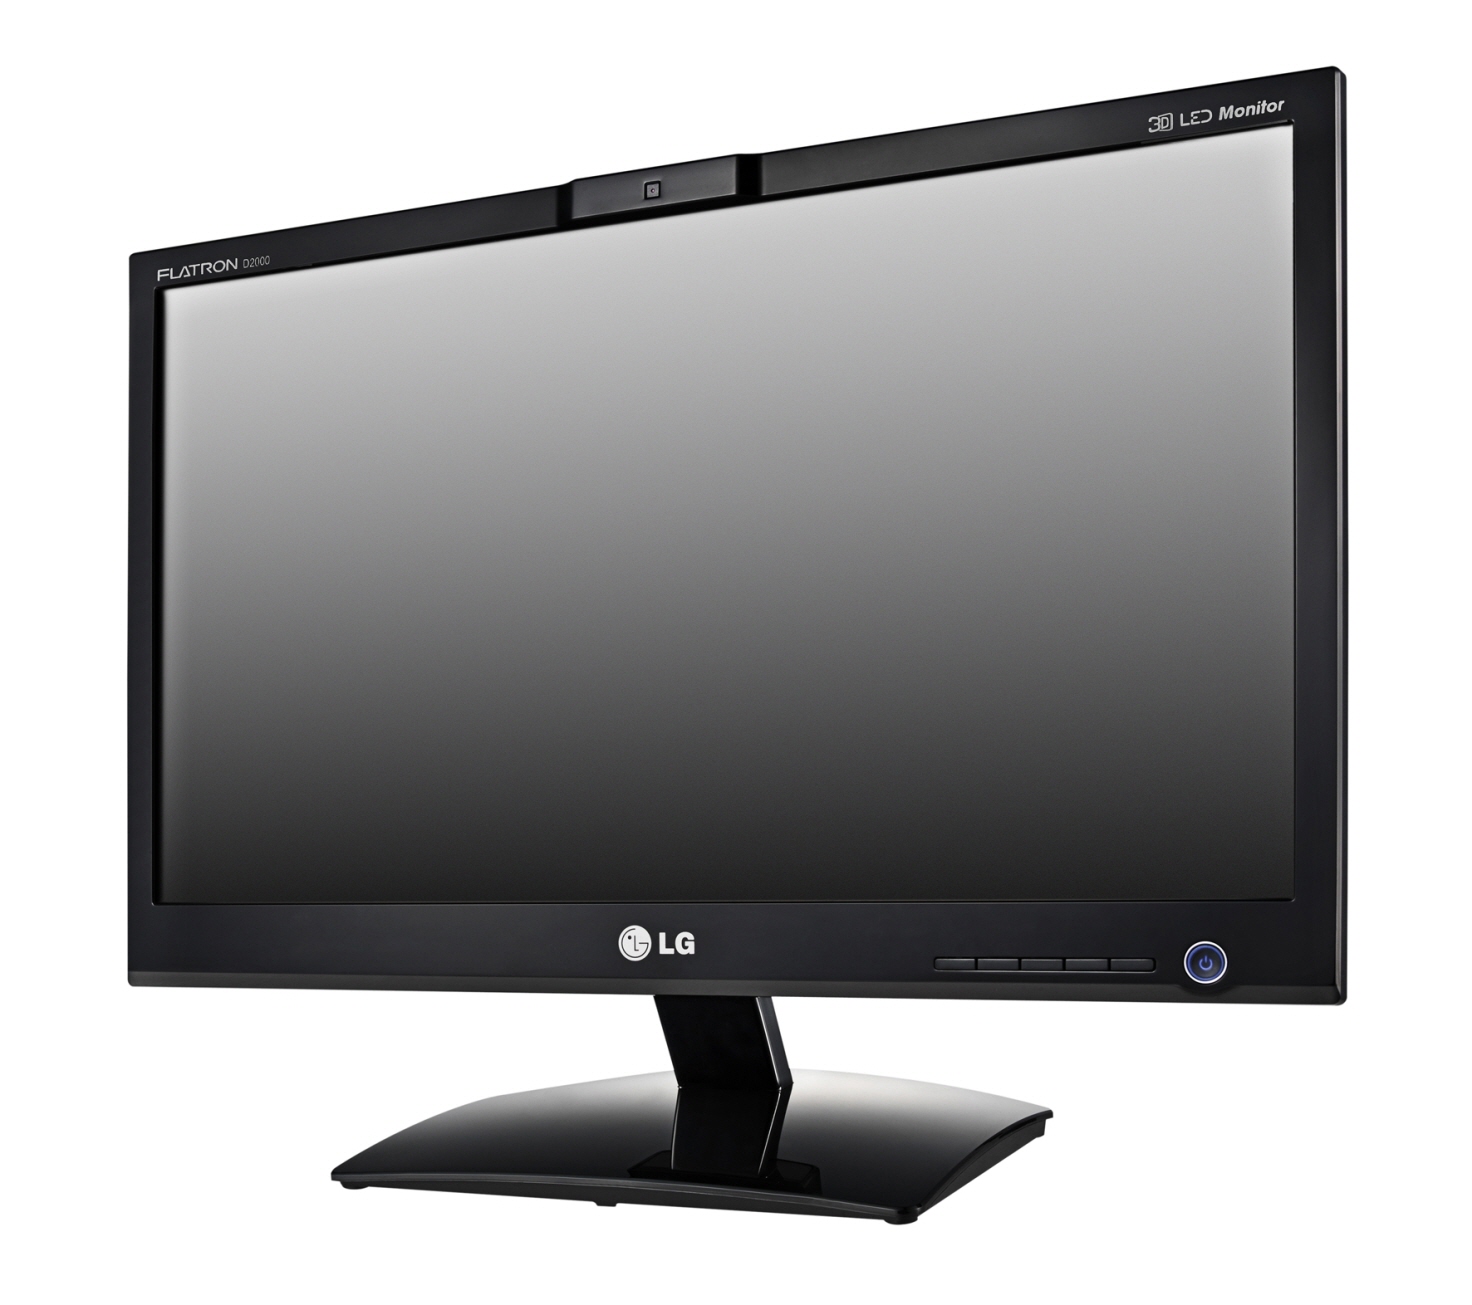 LG 3D monitor model D2000